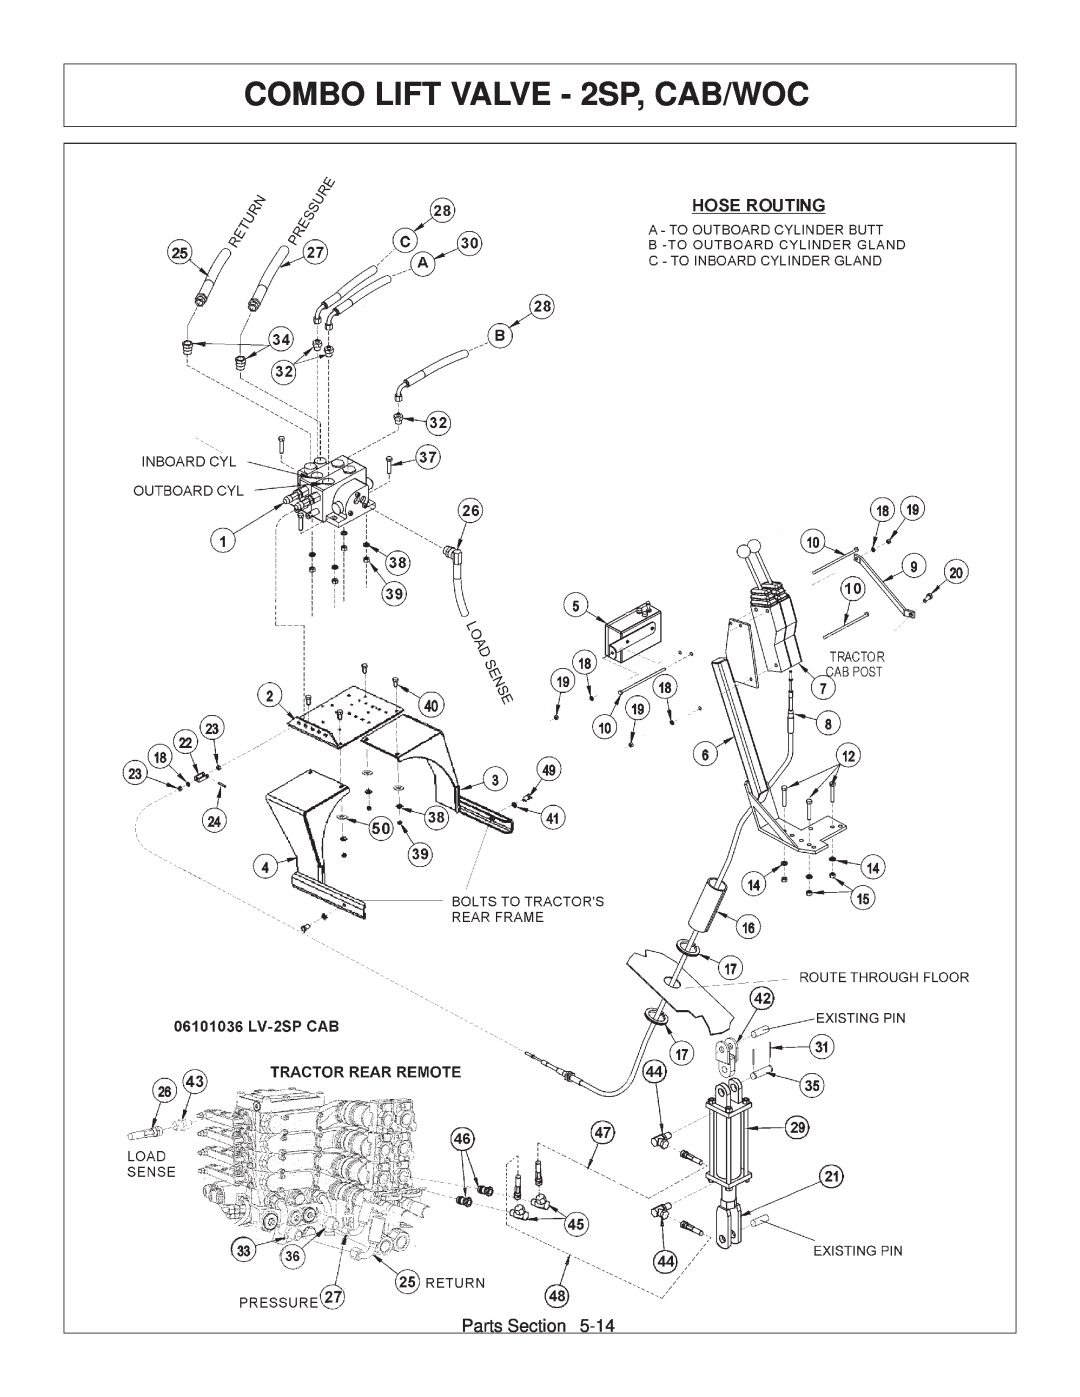 Tiger Products Co., Ltd 6020009 manual COMBO LIFT VALVE - 2SP, CAB/WOC, Parts Section 